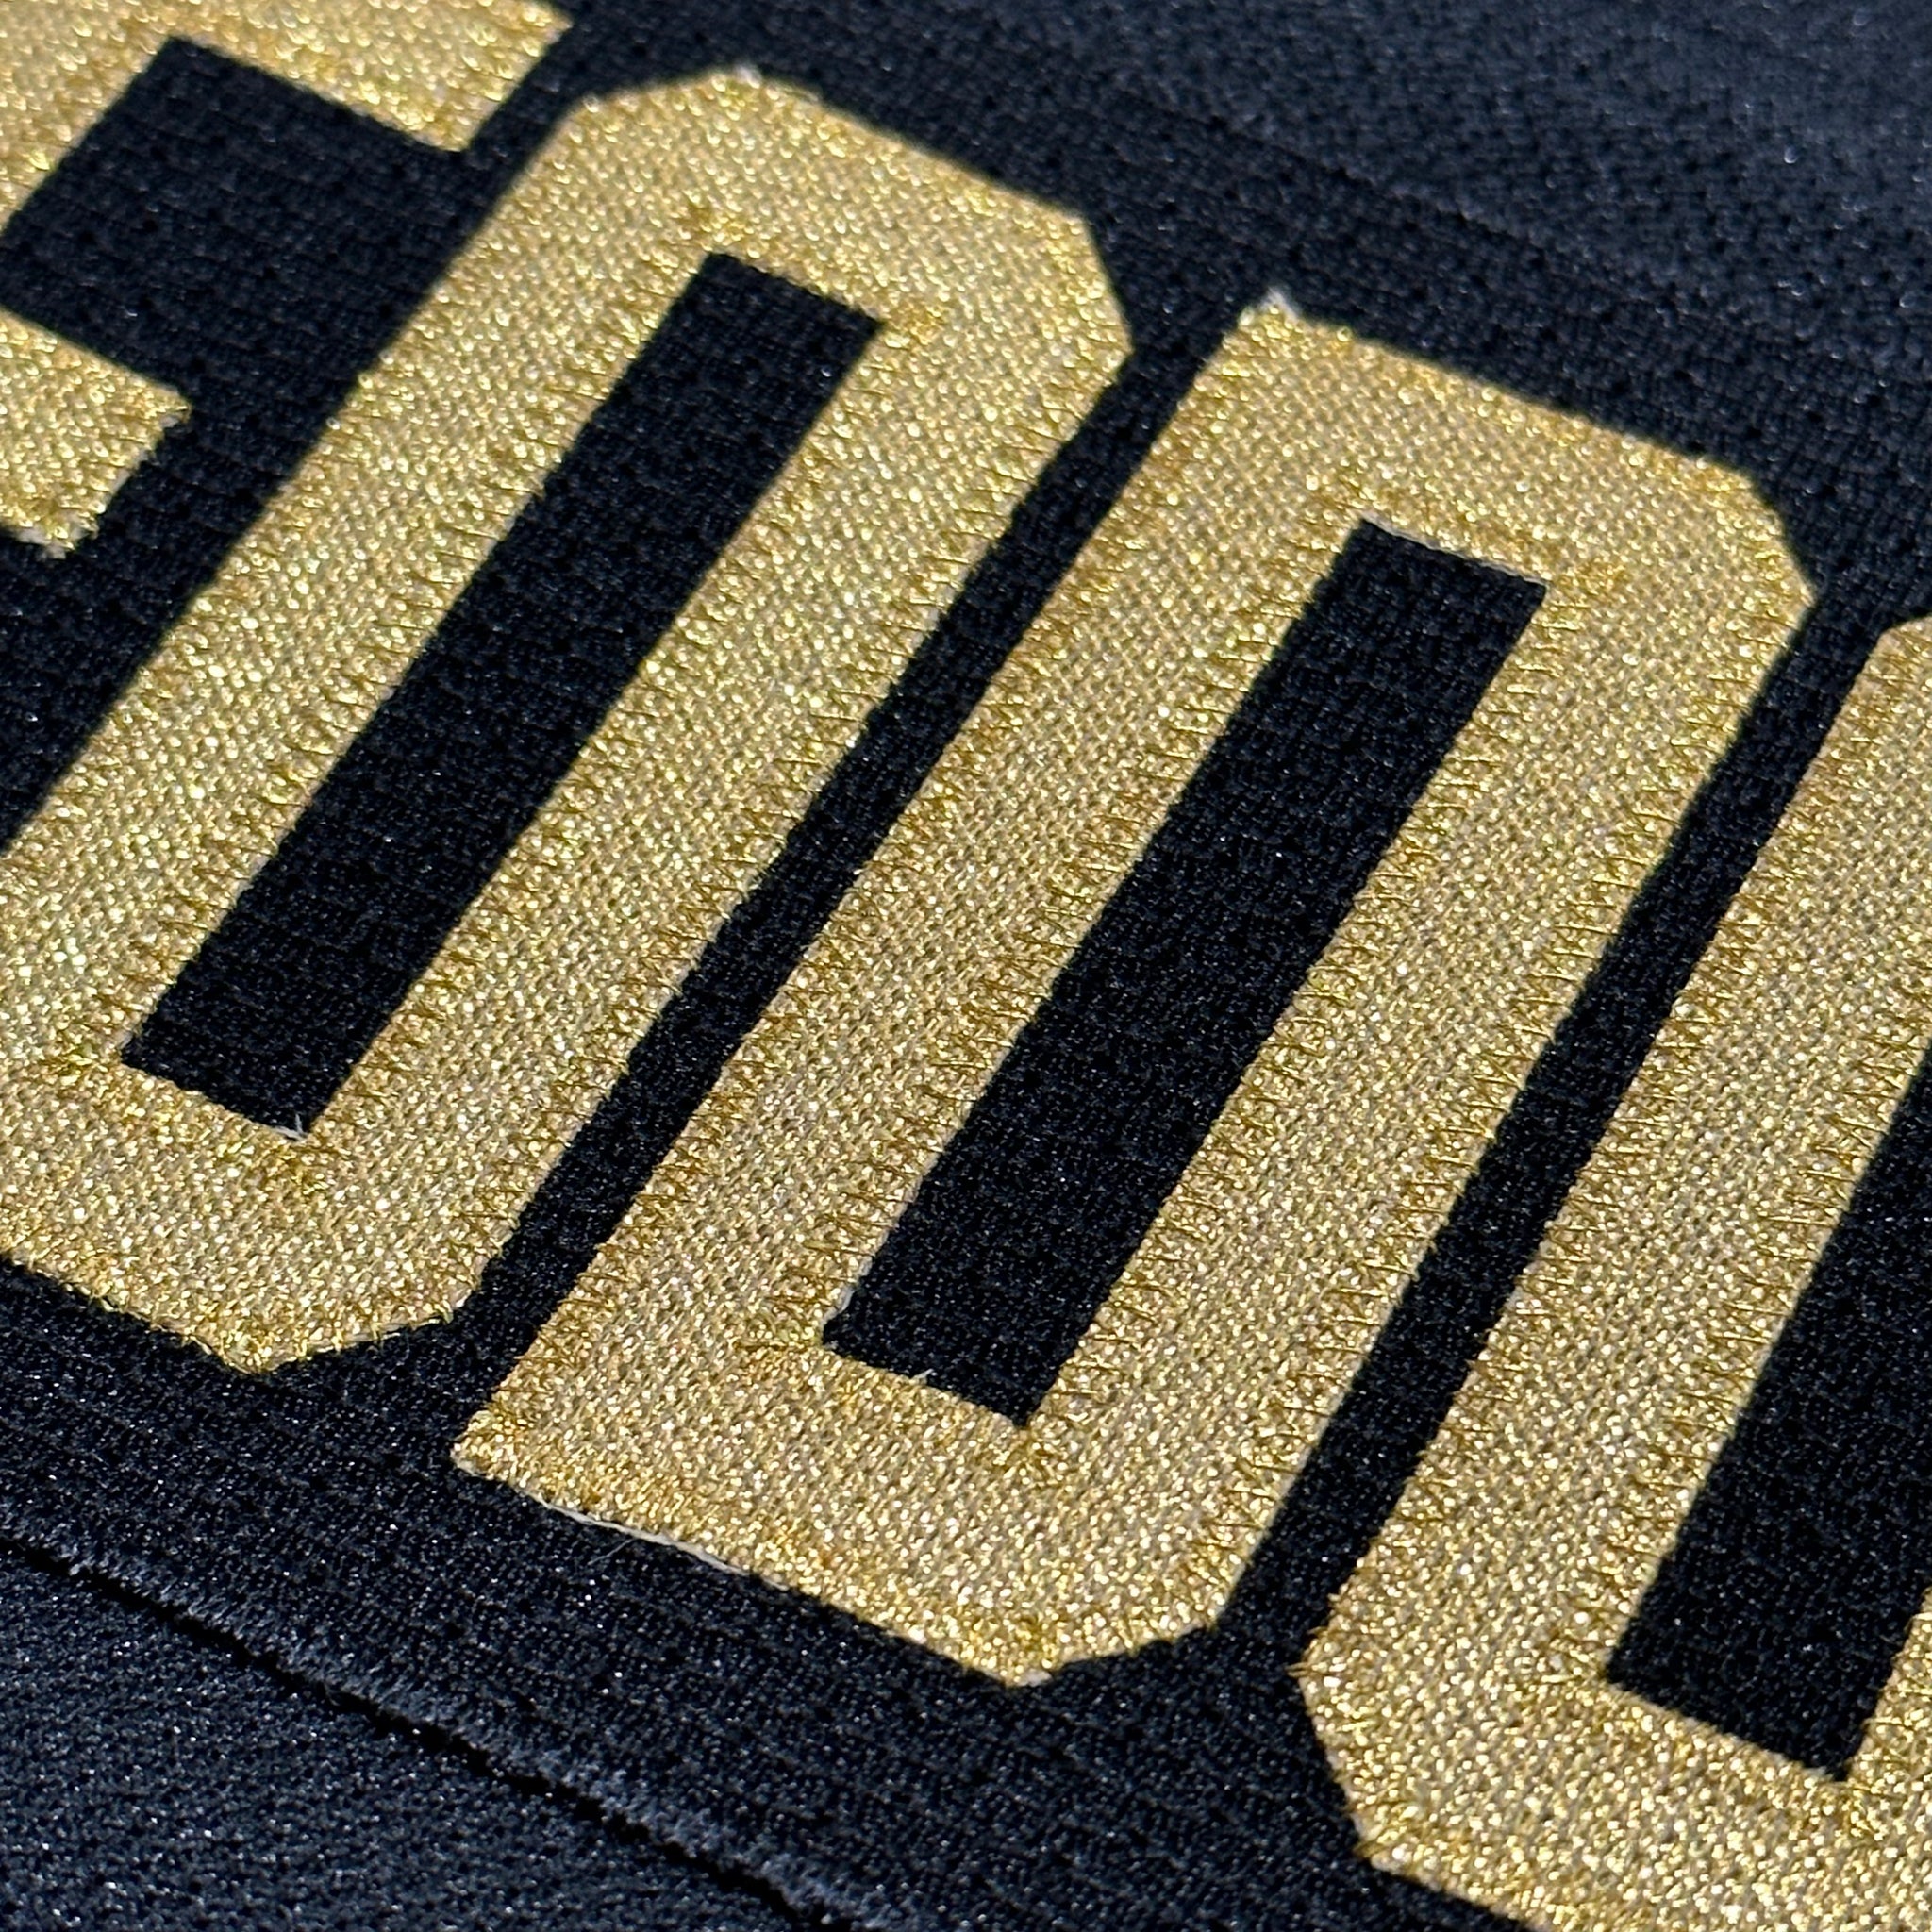 Vegas Golden Knights Adidas/Fanatics Retro Reverse 2.0 Jersey Customization  ***